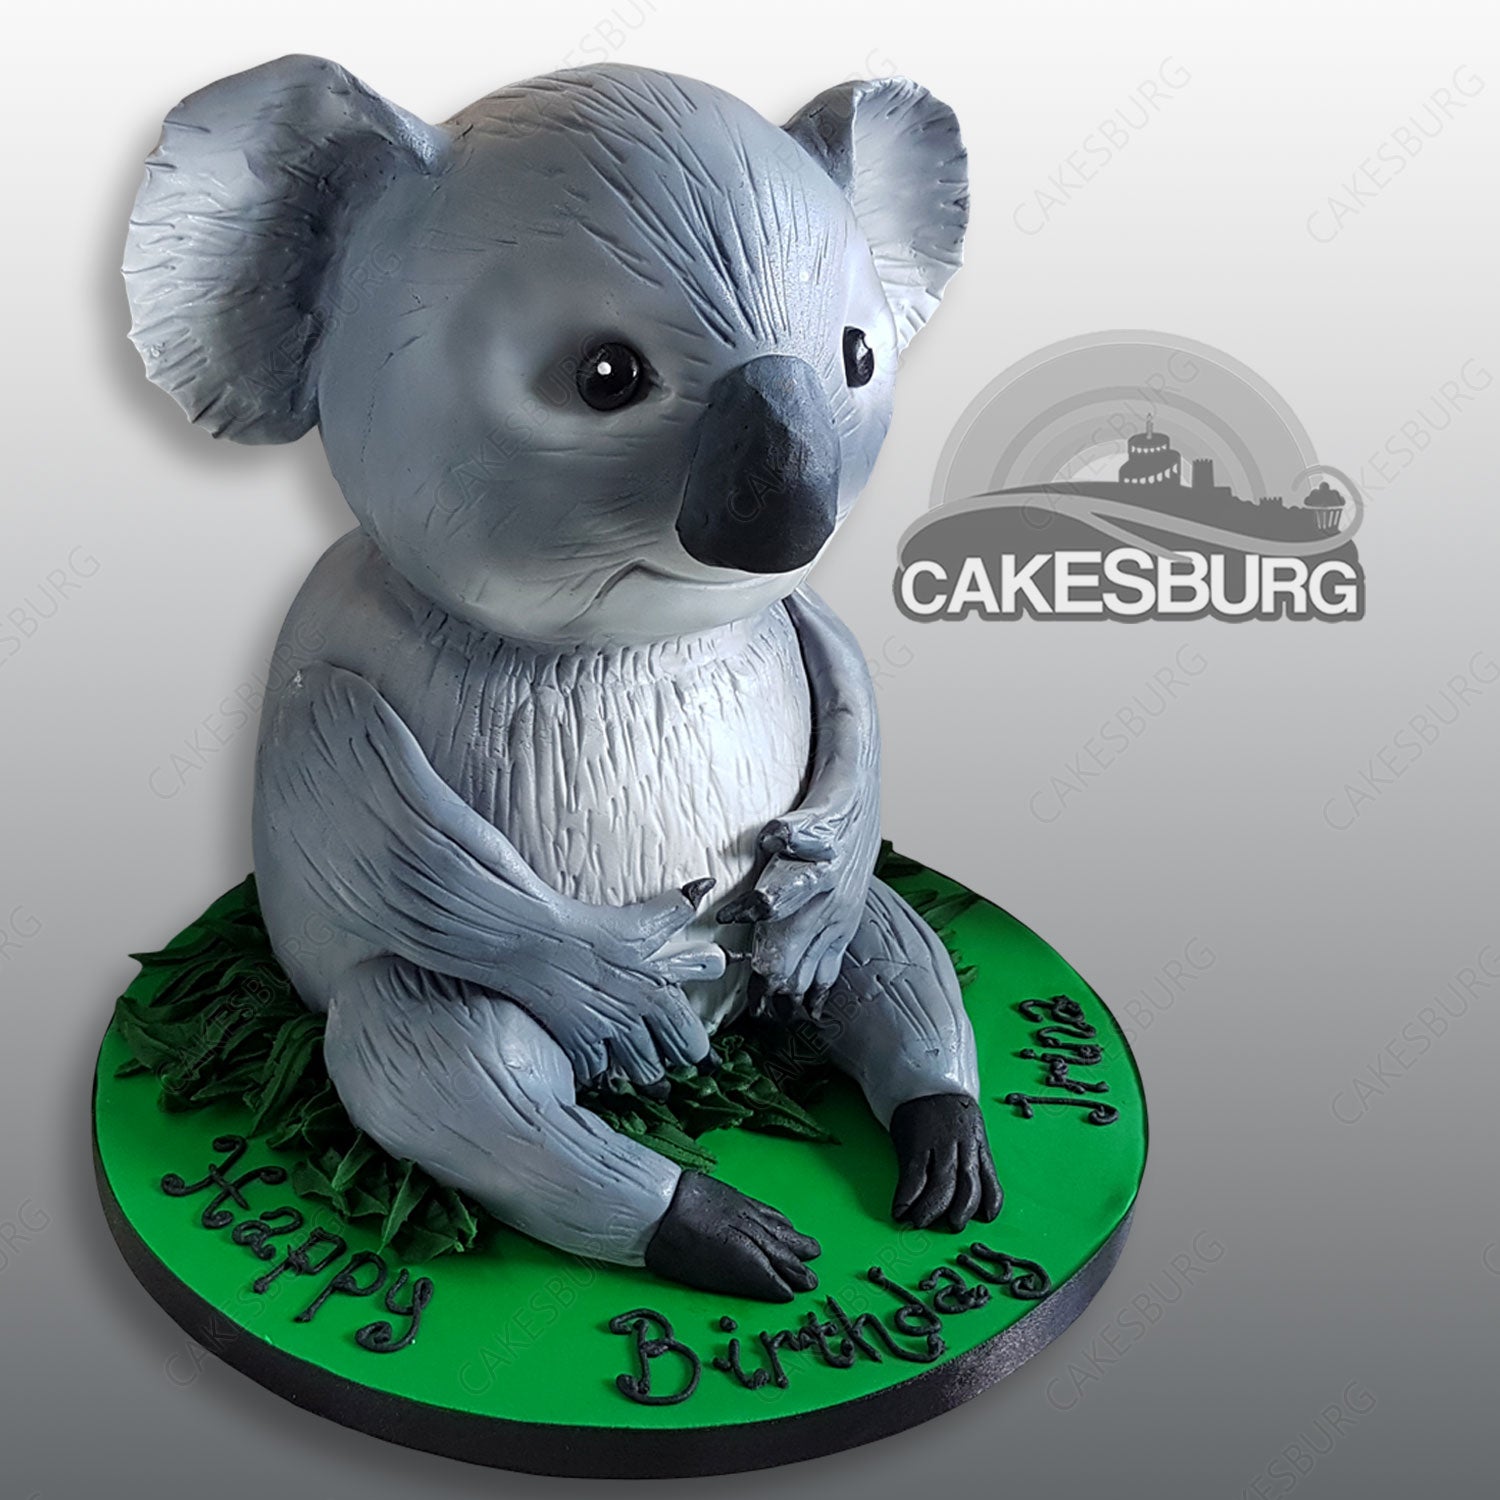 Koala and Baby Cake Tutorial! - YouTube